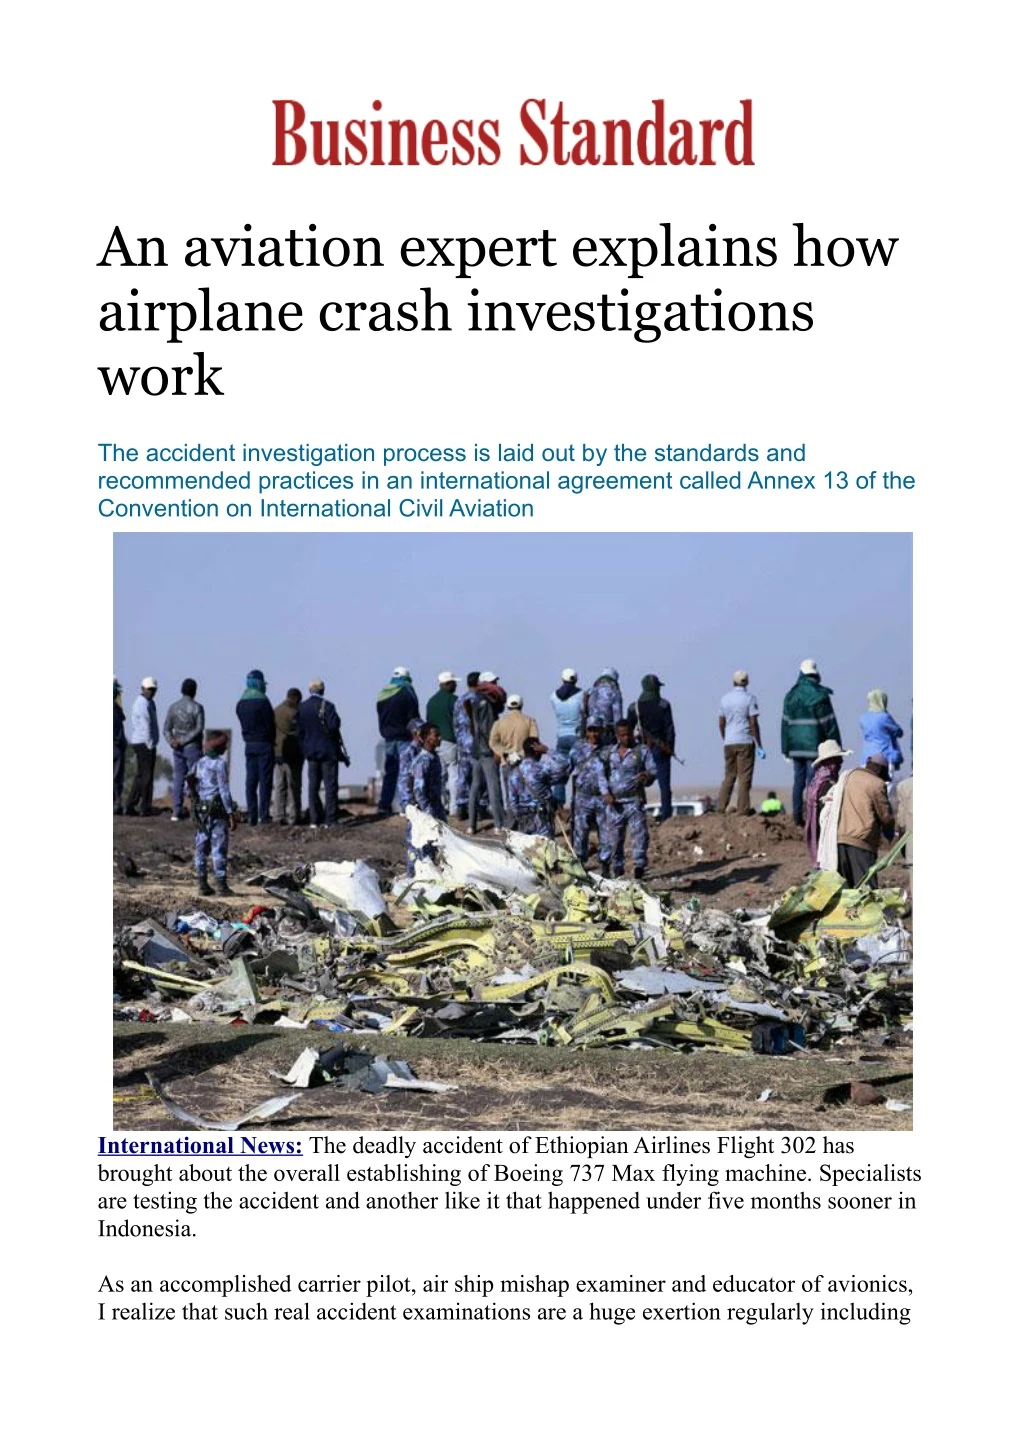 an aviation expert explains how airplane crash